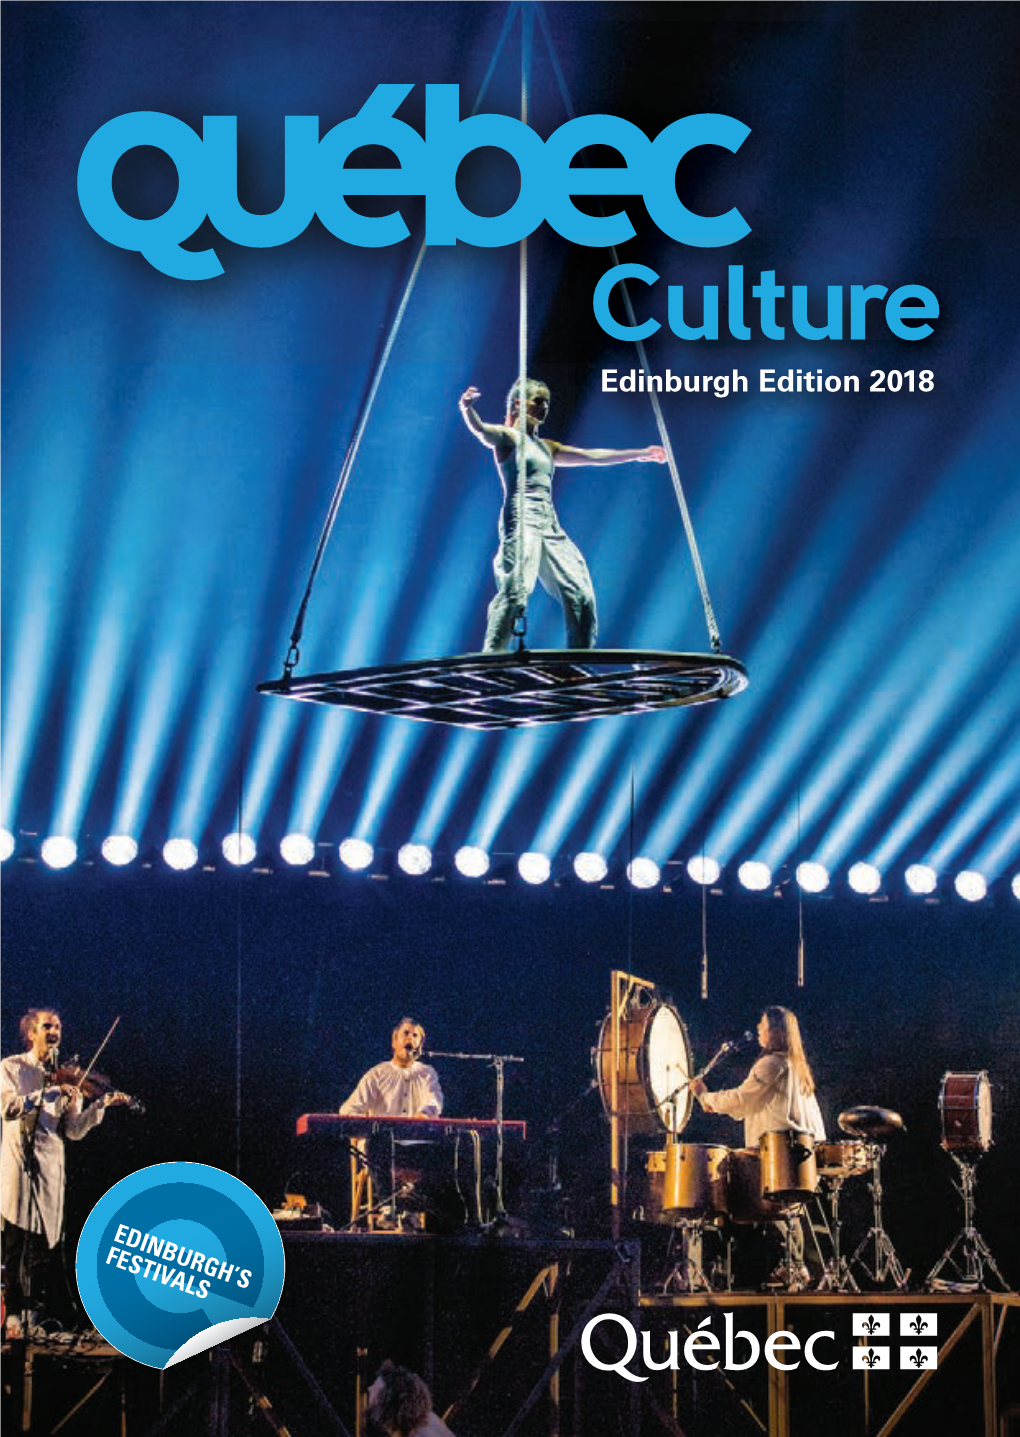 Edinburgh Edition 2018